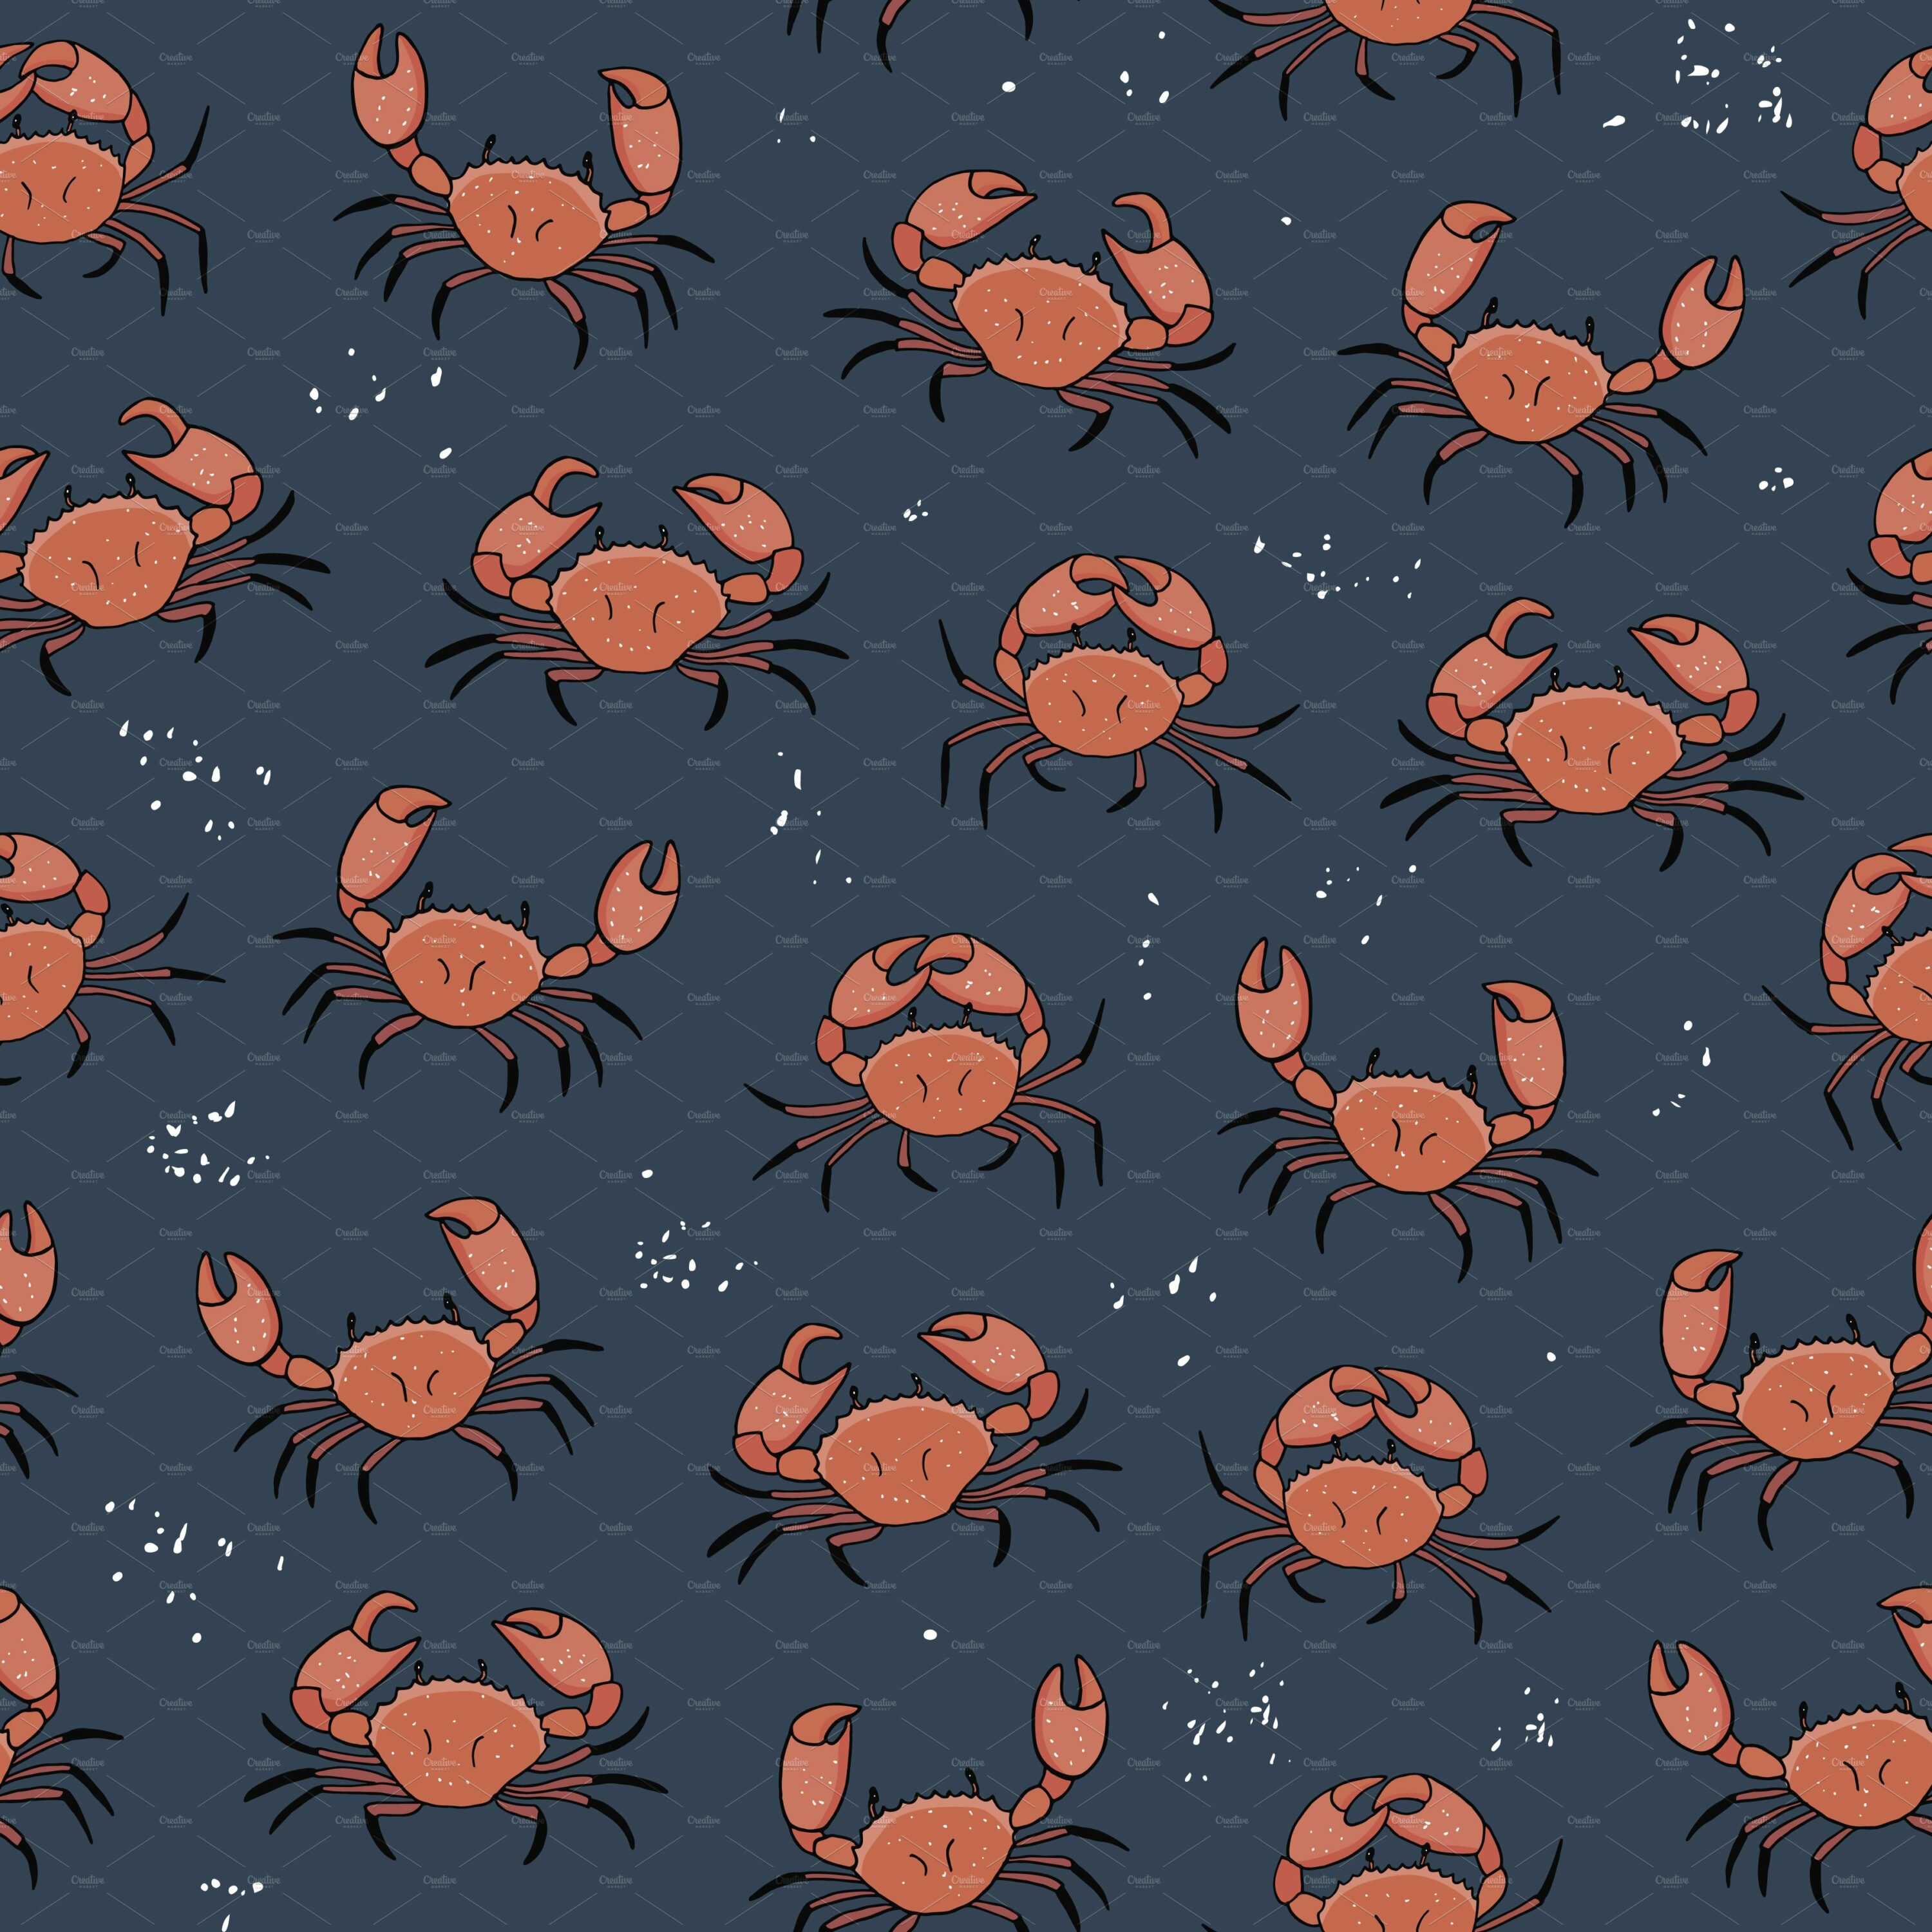 Dark background with red crabs set.